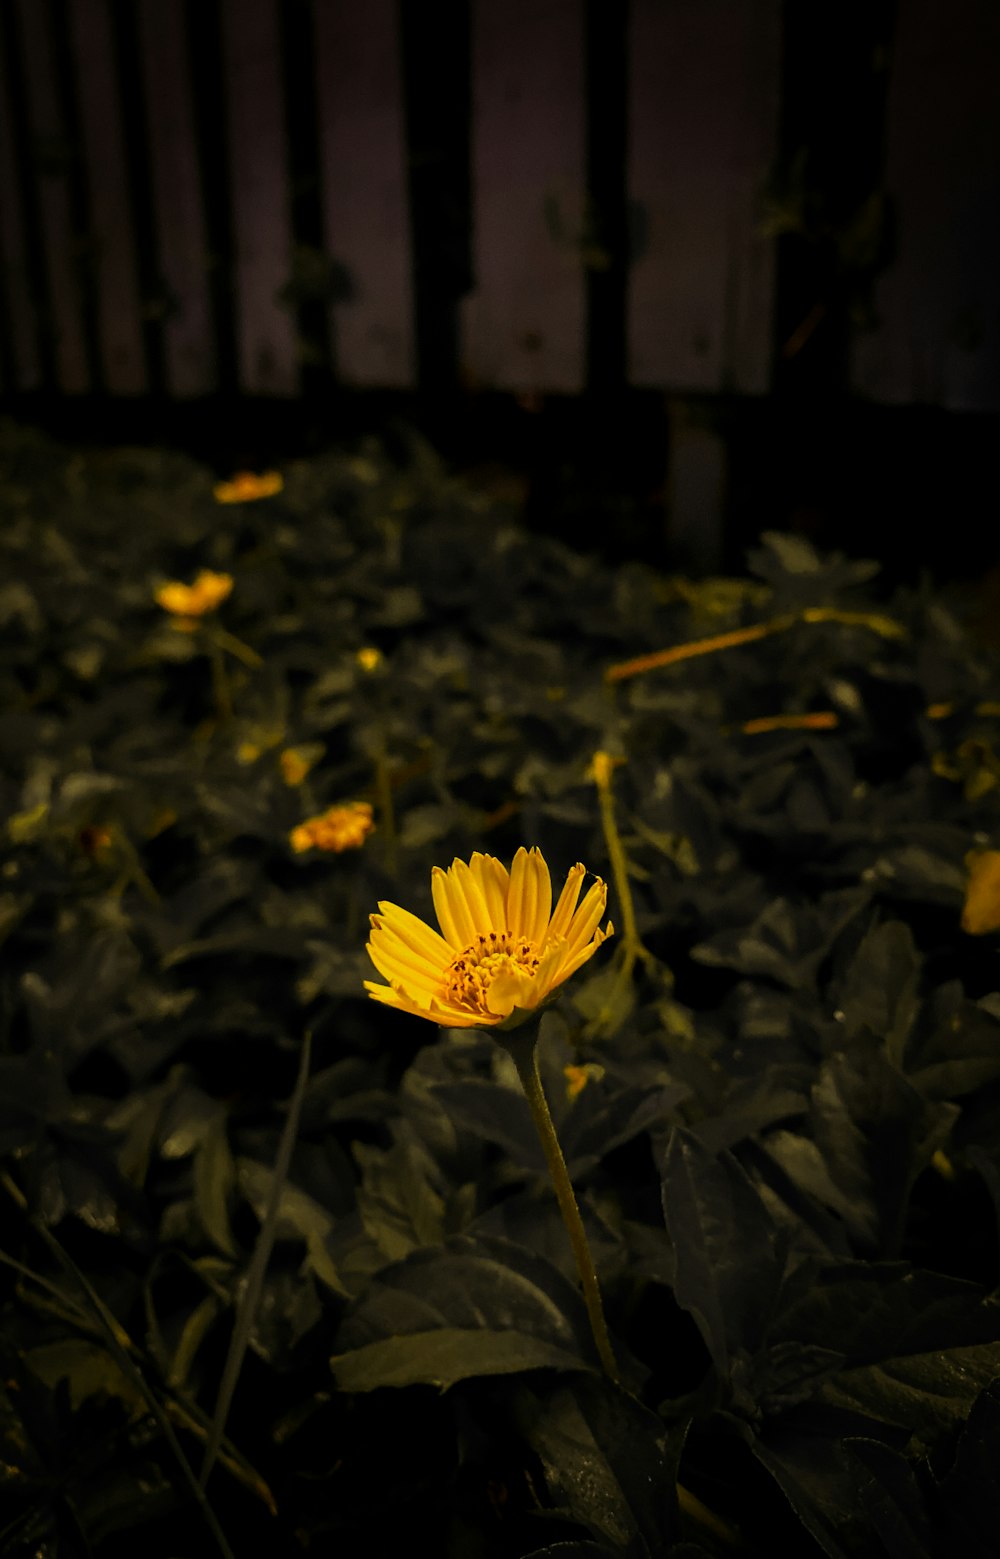 a yellow flower in a field of green plants